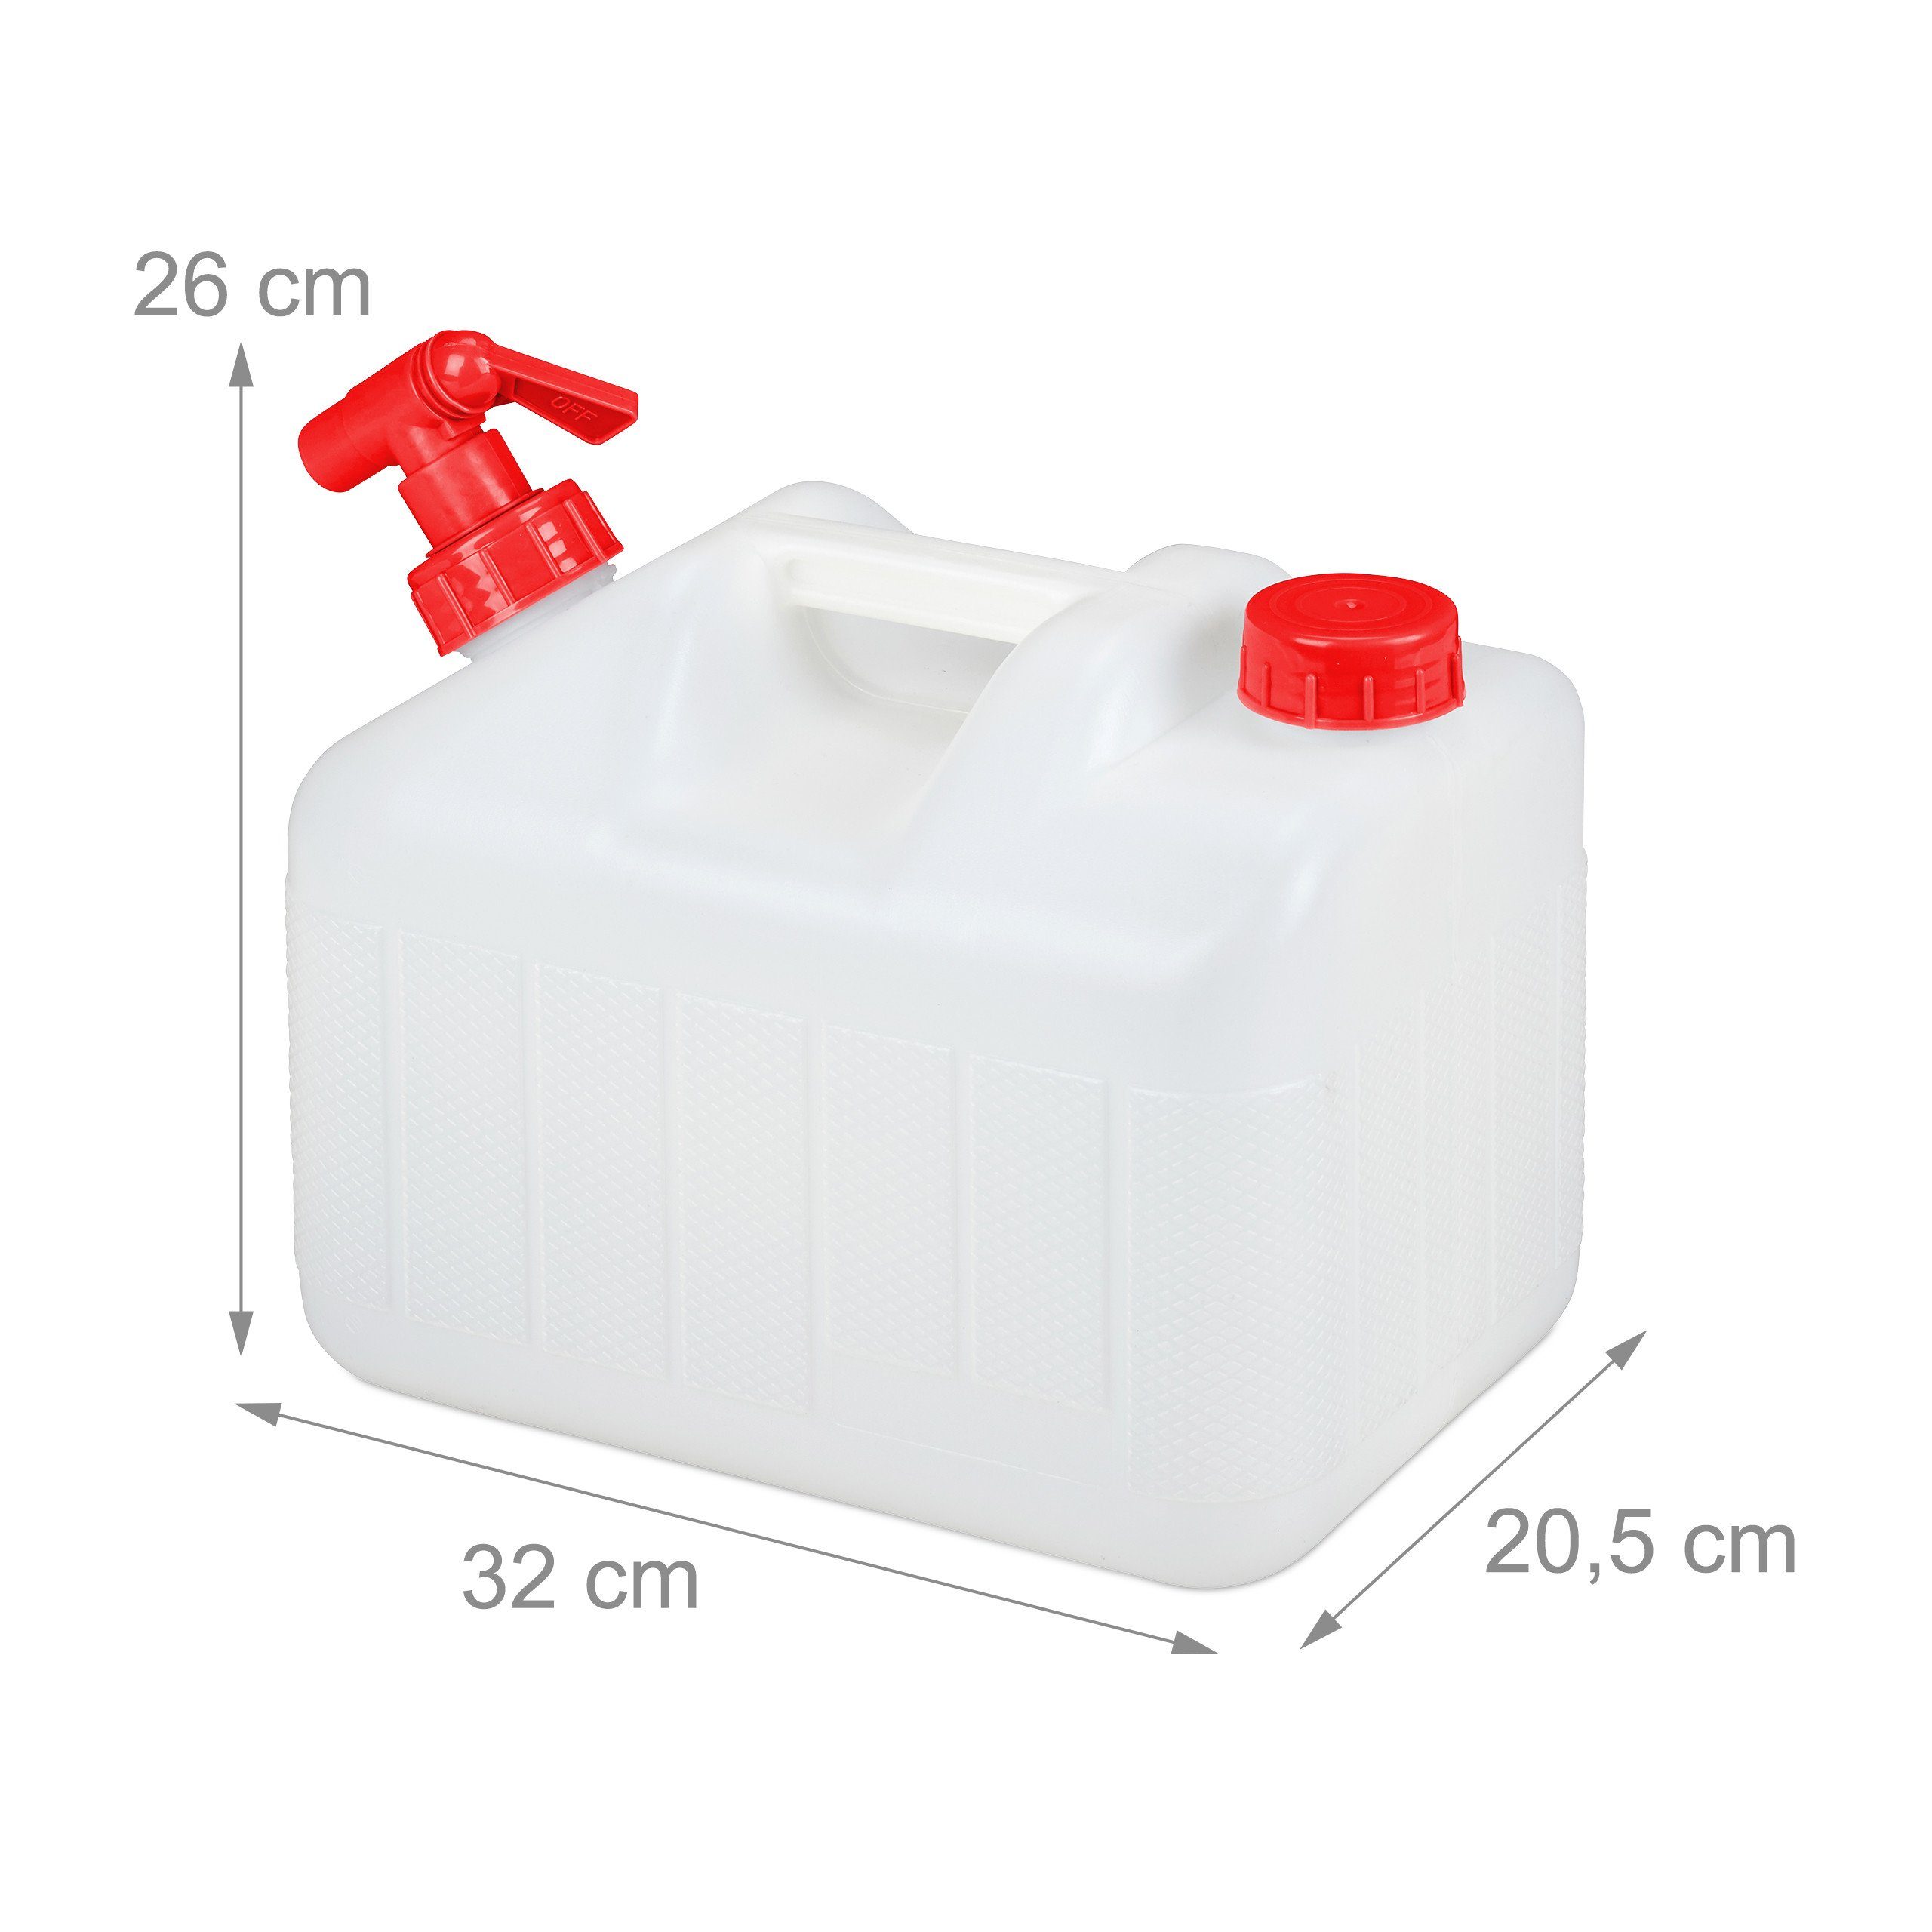 10 Hahn, relaxdays Wasserkanister Liter Kanister mit